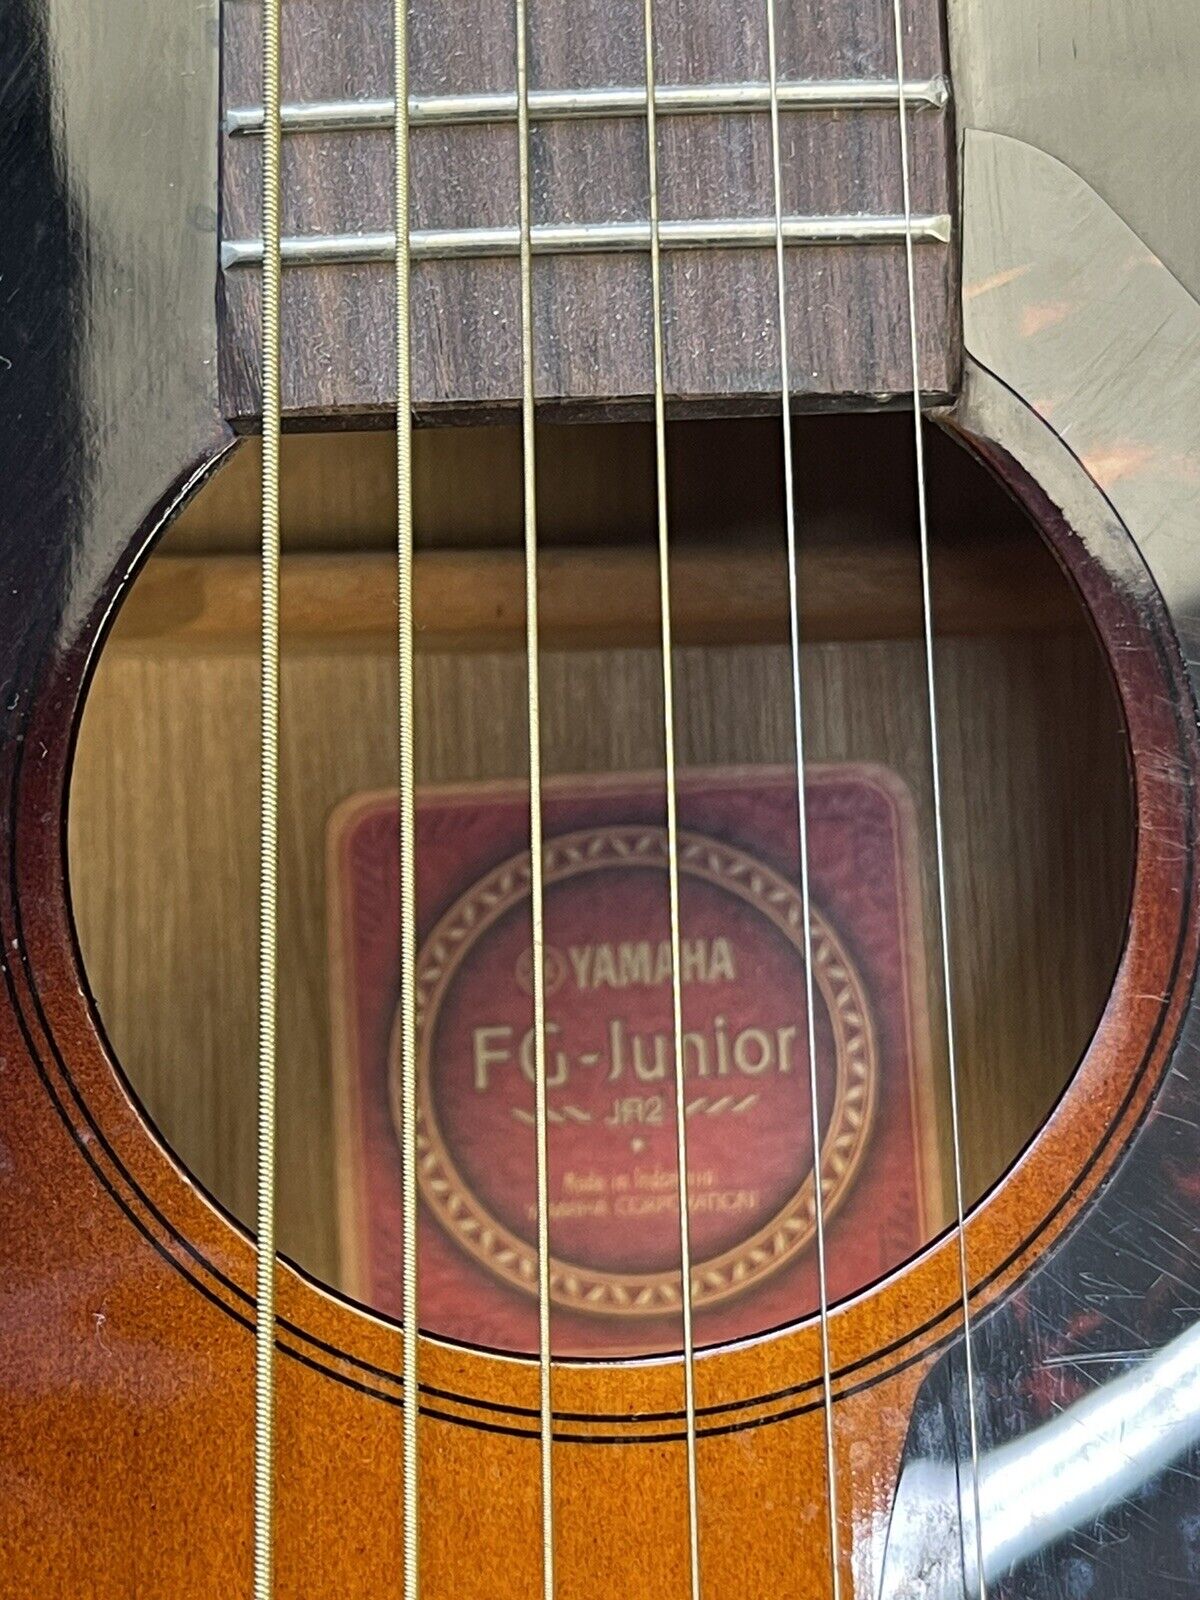 Yamaha FG-Junior JR2 Sunburst Acoustic Guitar With Case Bag 8